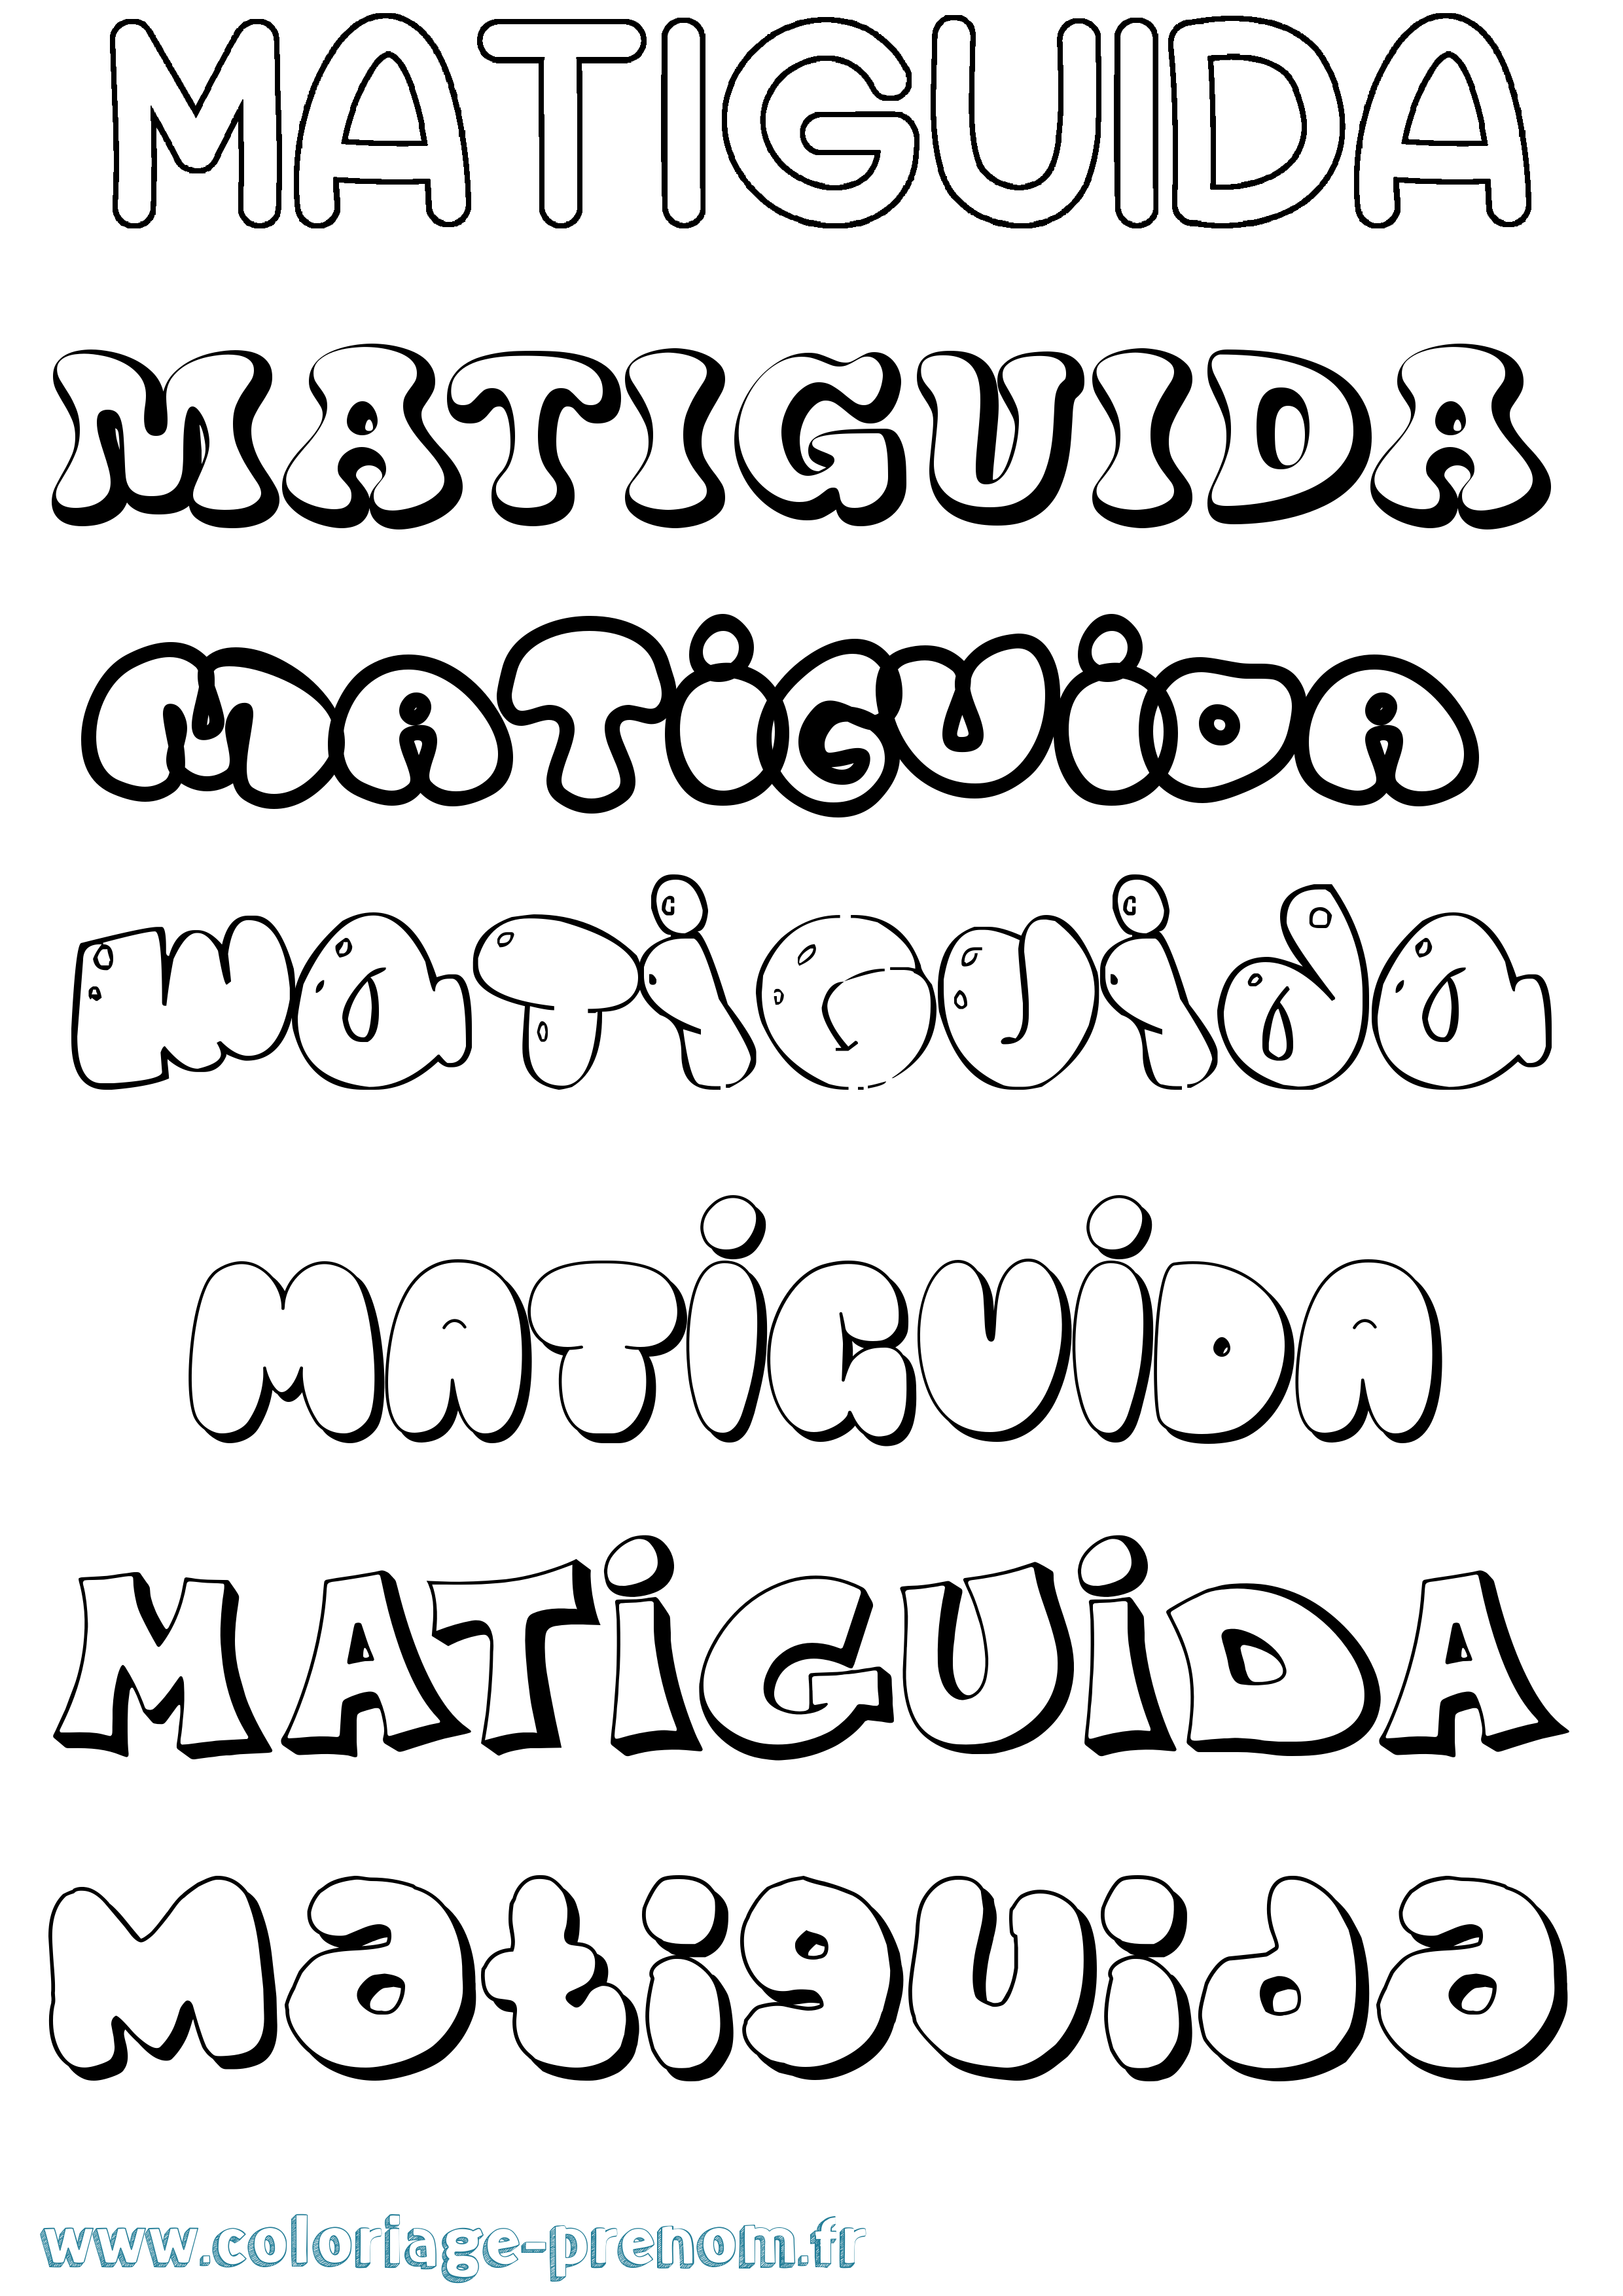 Coloriage prénom Matiguida Bubble